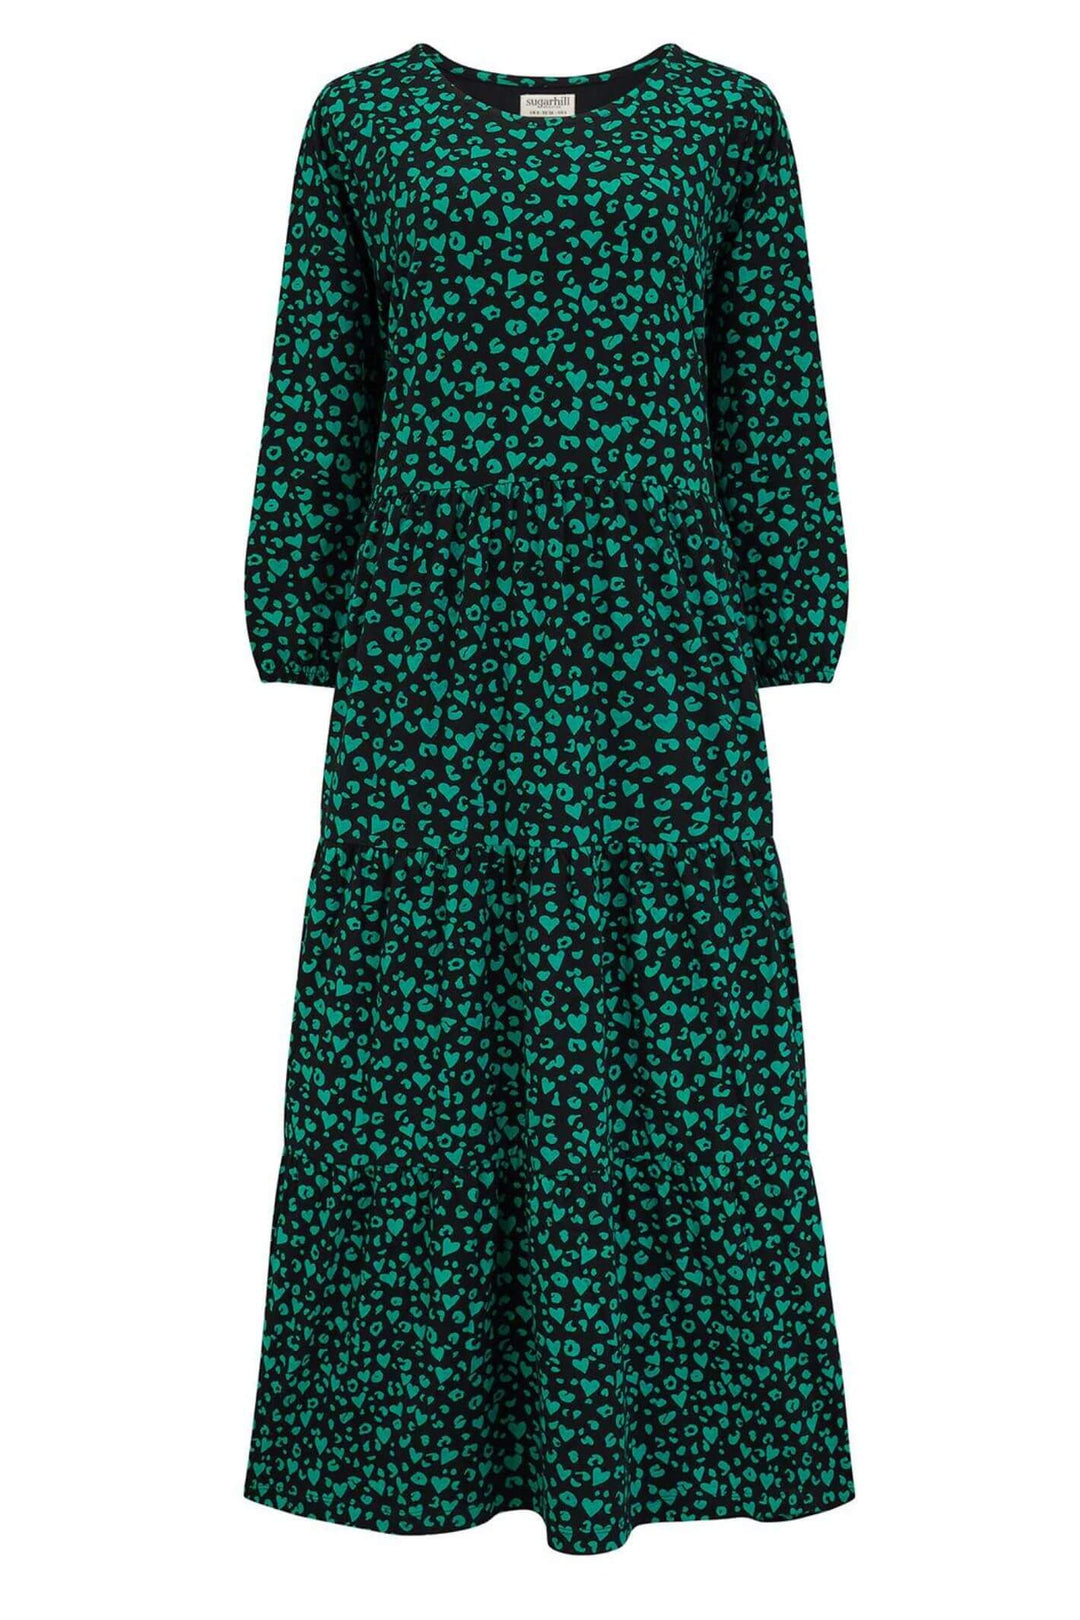 Sugarhill Brighton D1064 Black Bakari Green Leopard Love Jersey Tiered Maxi Dress